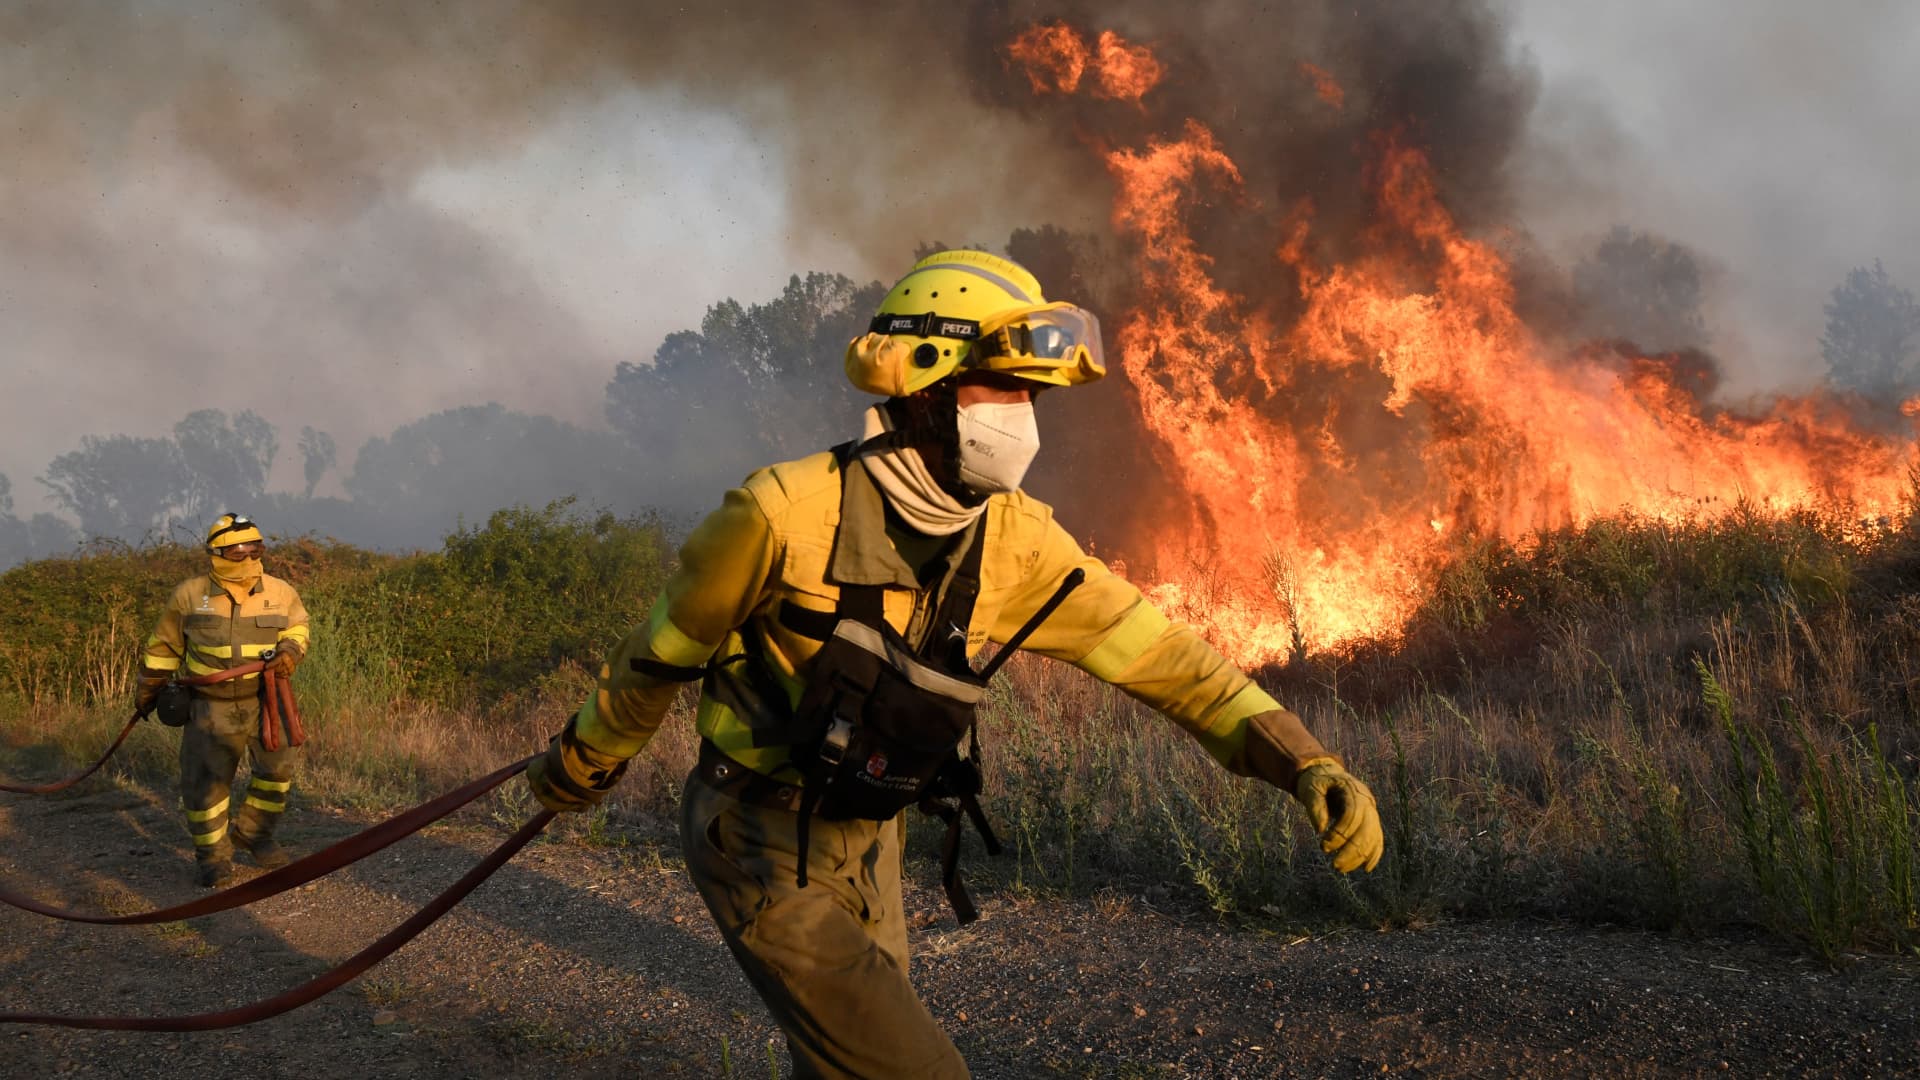 'Heat apocalypse': Photos show Europe's devastating wildfires as temperatures surge